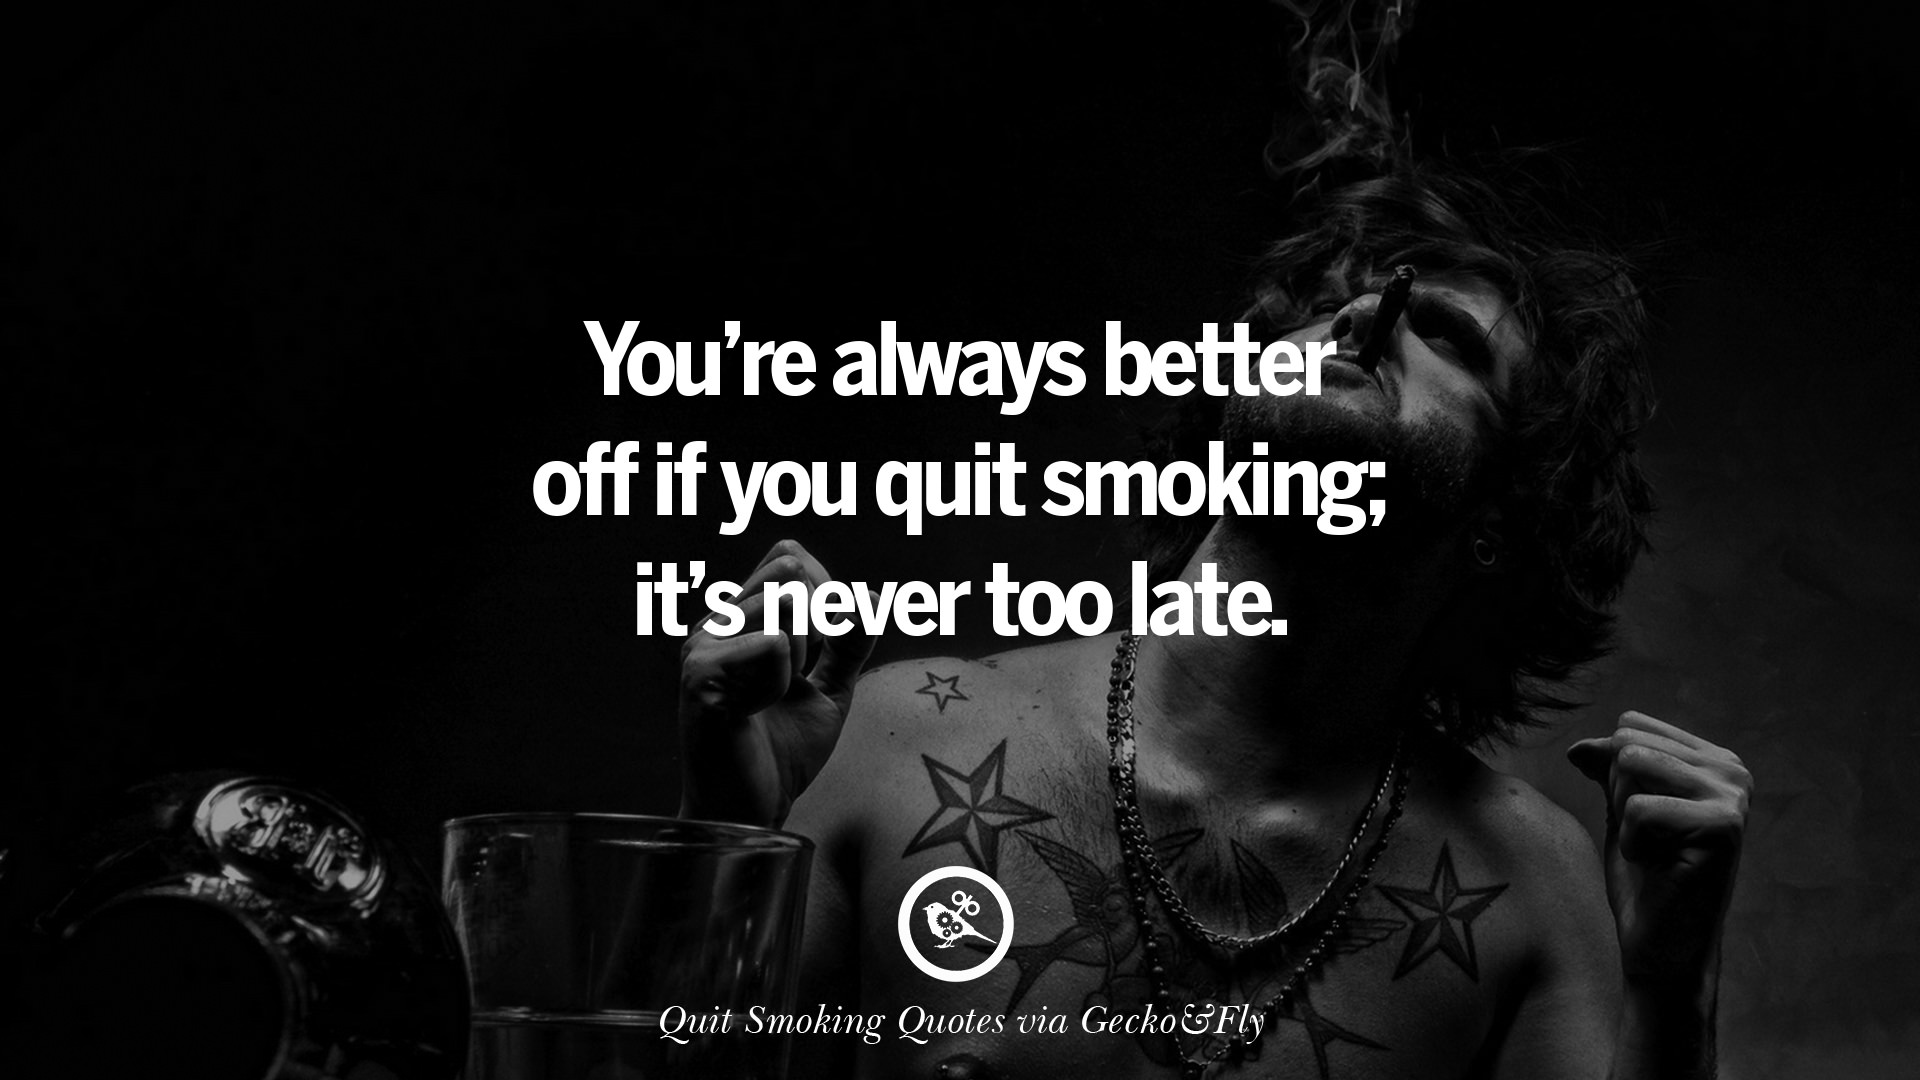 persuasive speech on quitting smoking